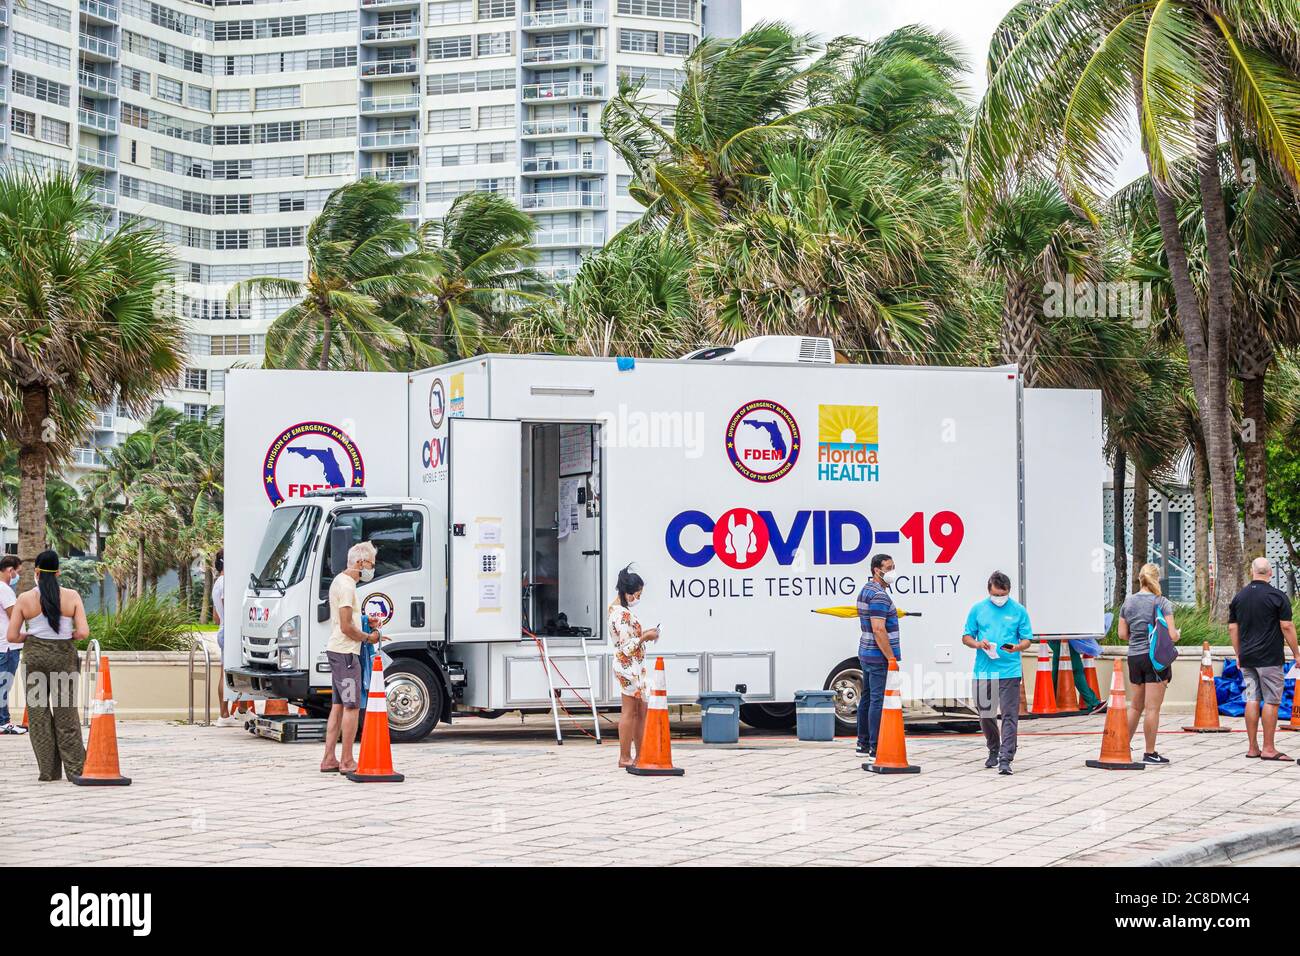 Miami Beach Florida,Covid-19 coronavirus pandemic biological crisis,mobile testing facility,FDEM Division of Emergency Management,line queue,man men m Stock Photo